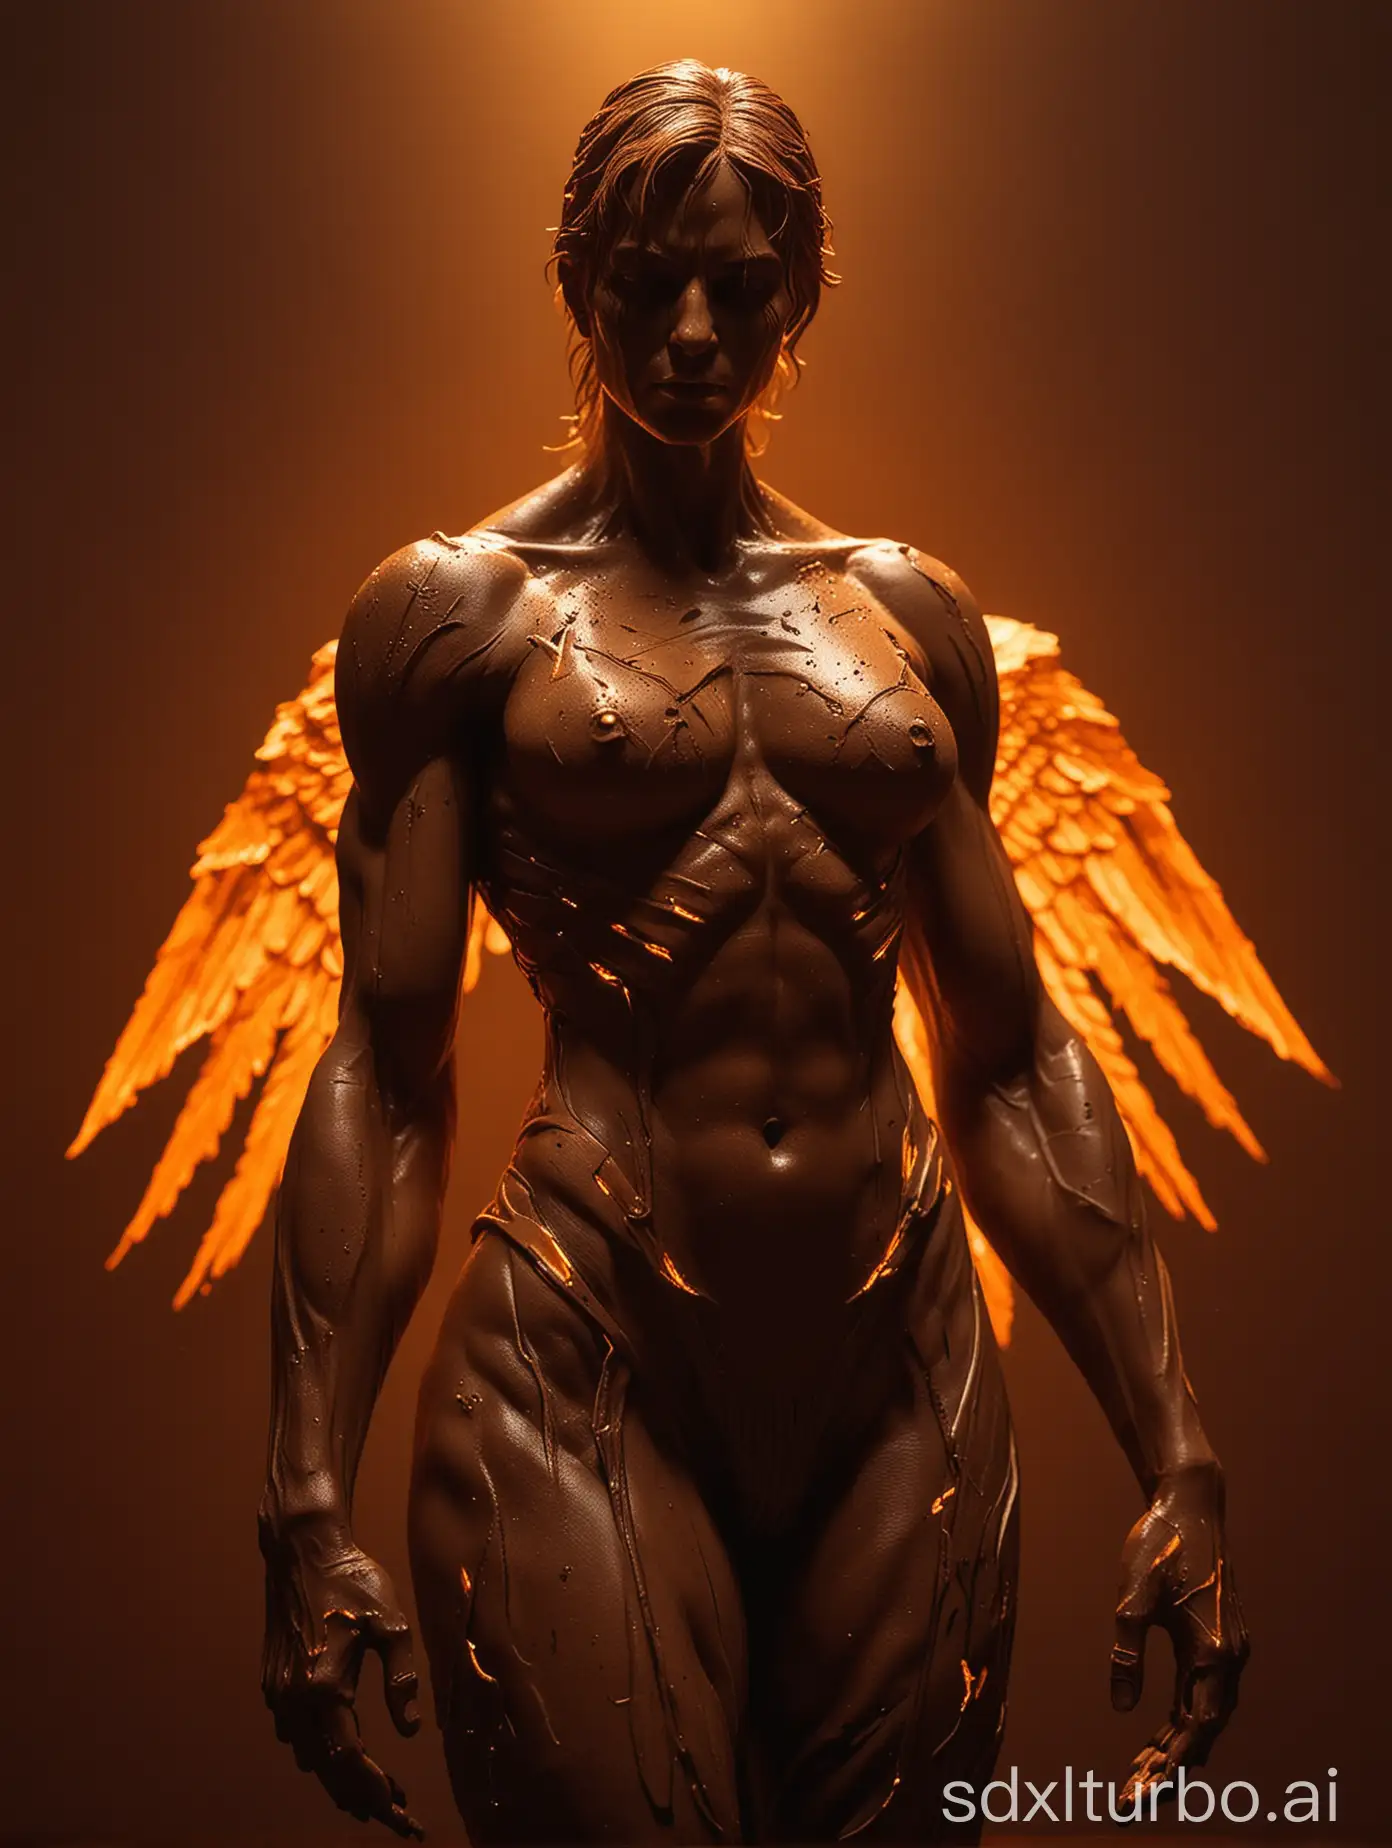 Epic-Cinematic-Portrait-of-a-Sad-Muscle-Angel-Statue-Under-Orange-Night-Light